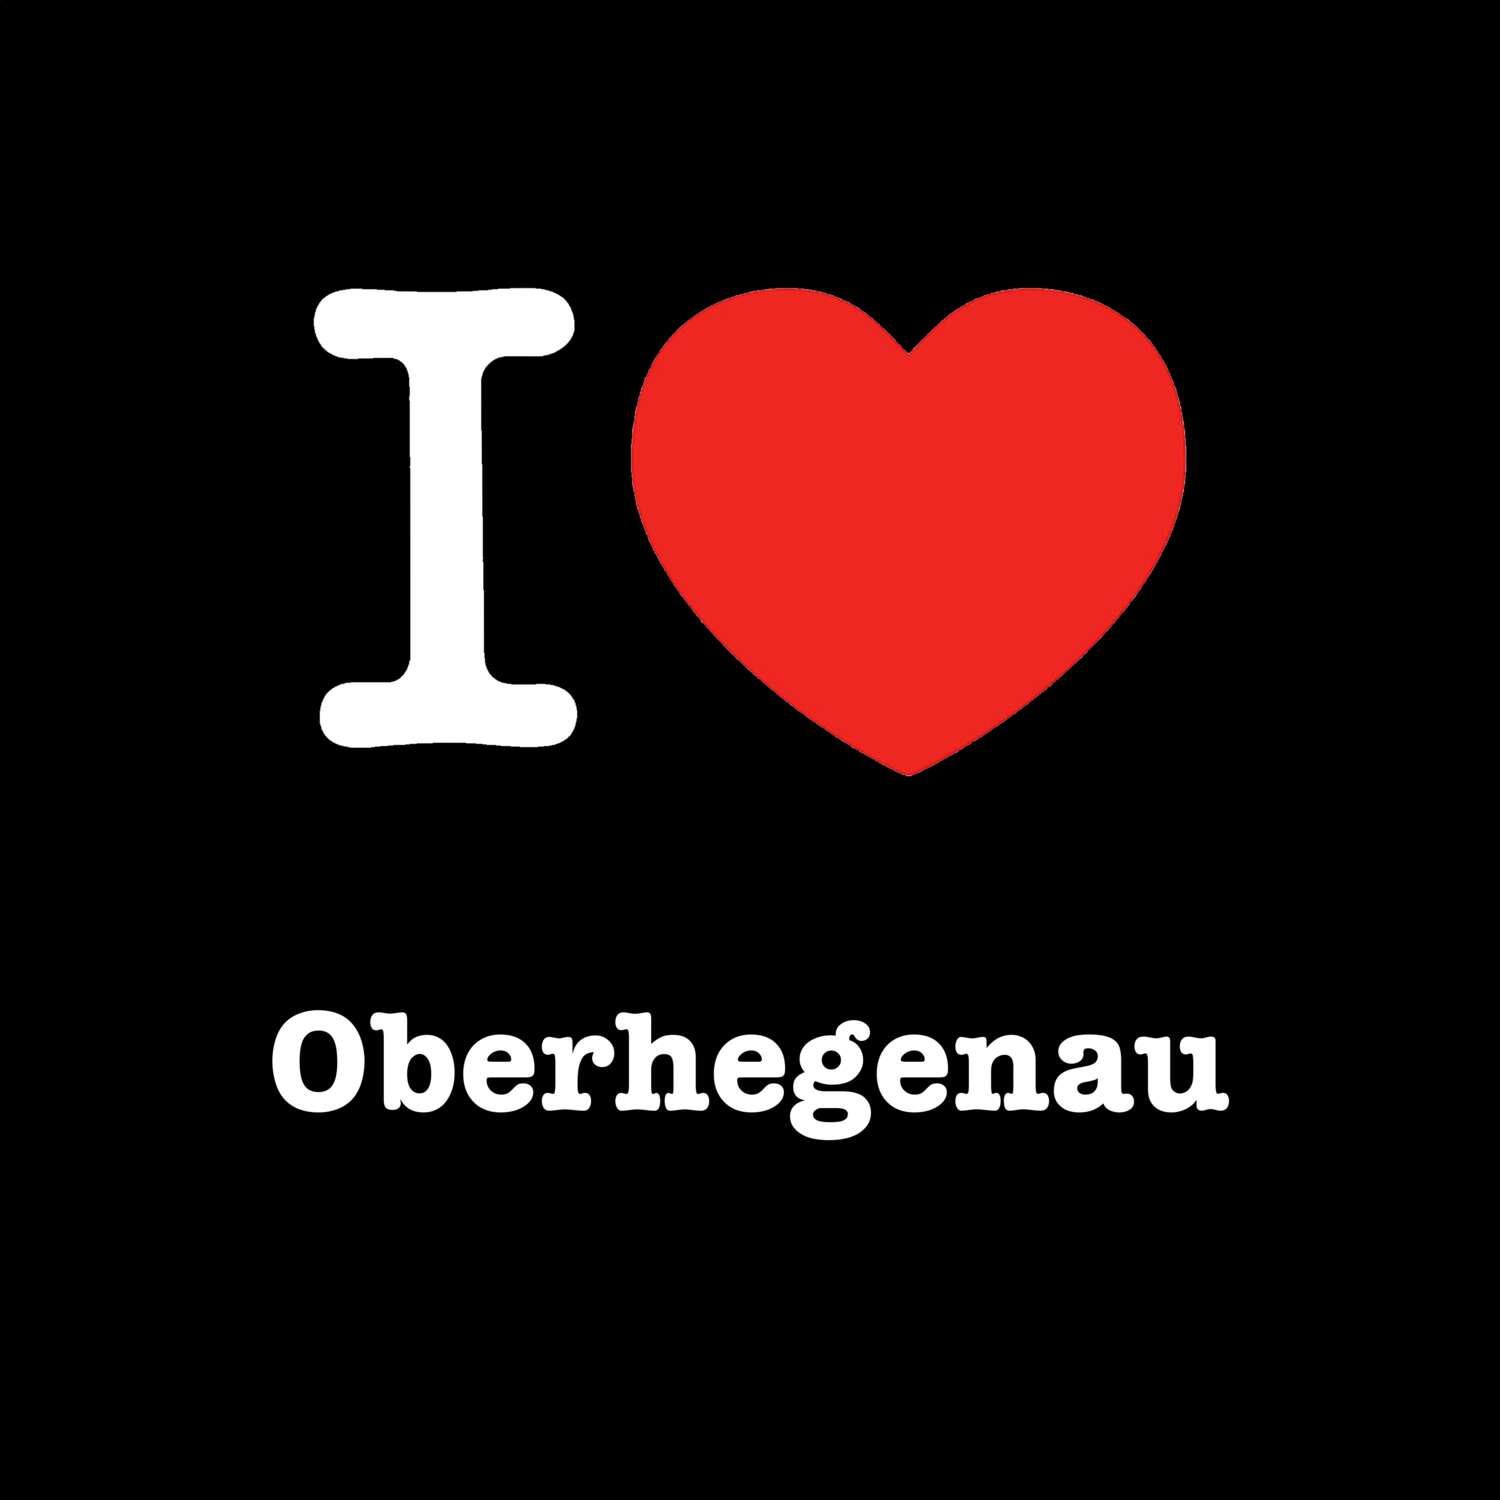 Oberhegenau T-Shirt »I love«